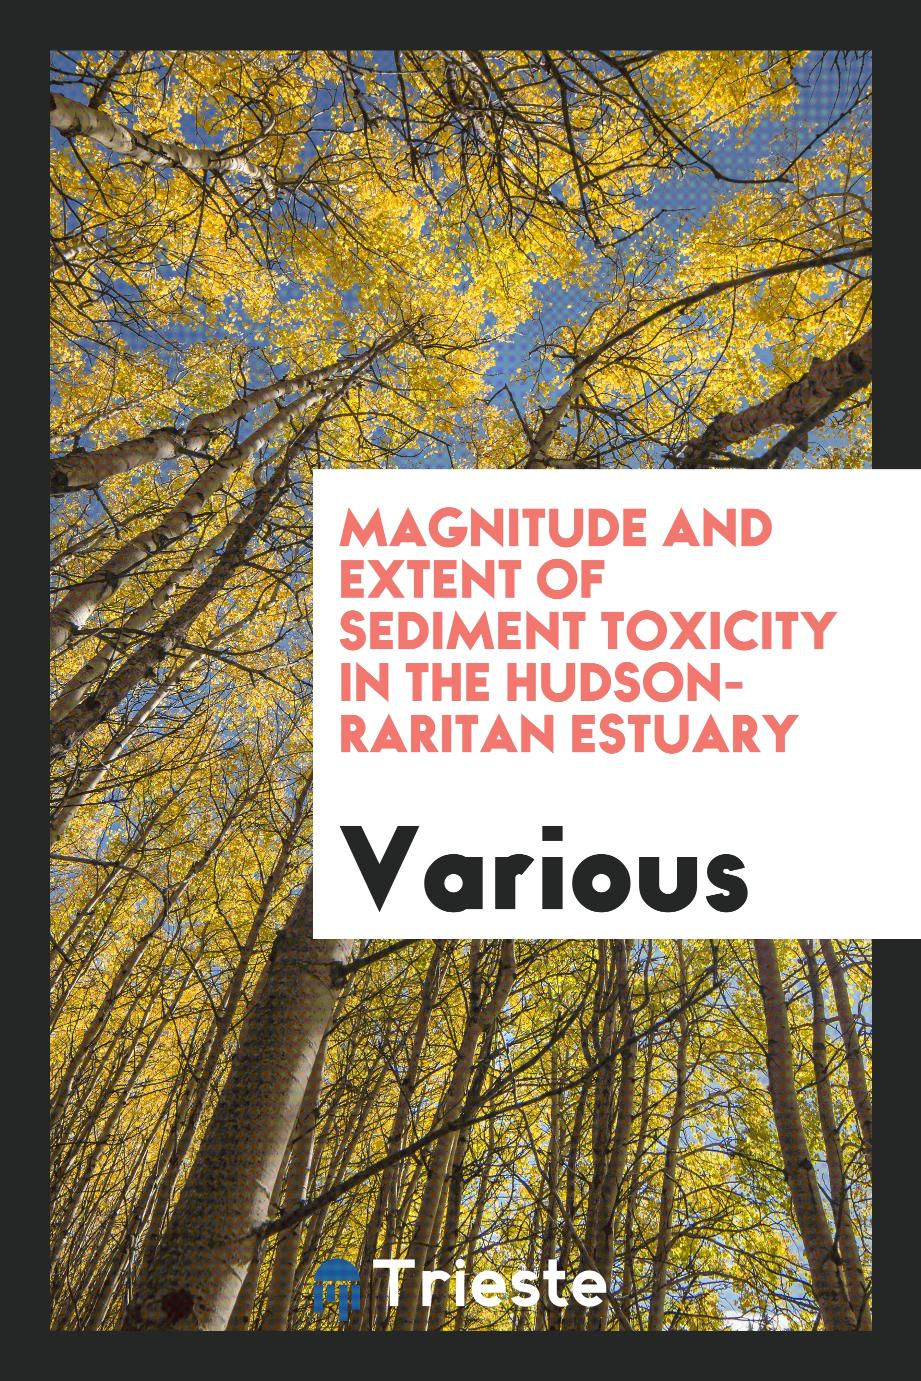 Magnitude and extent of sediment toxicity in the Hudson-Raritan Estuary